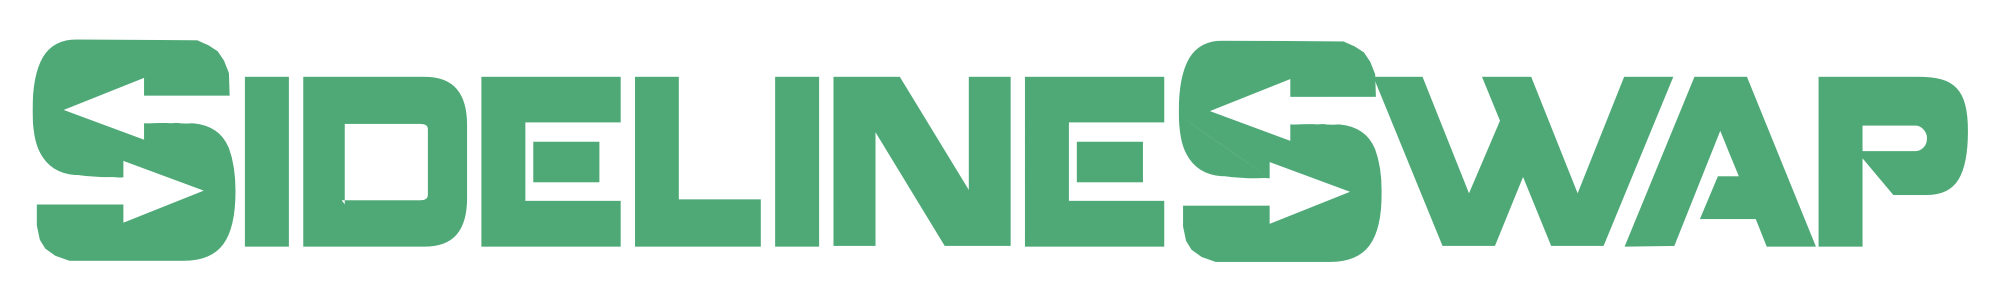 Sidelineswap logo.png